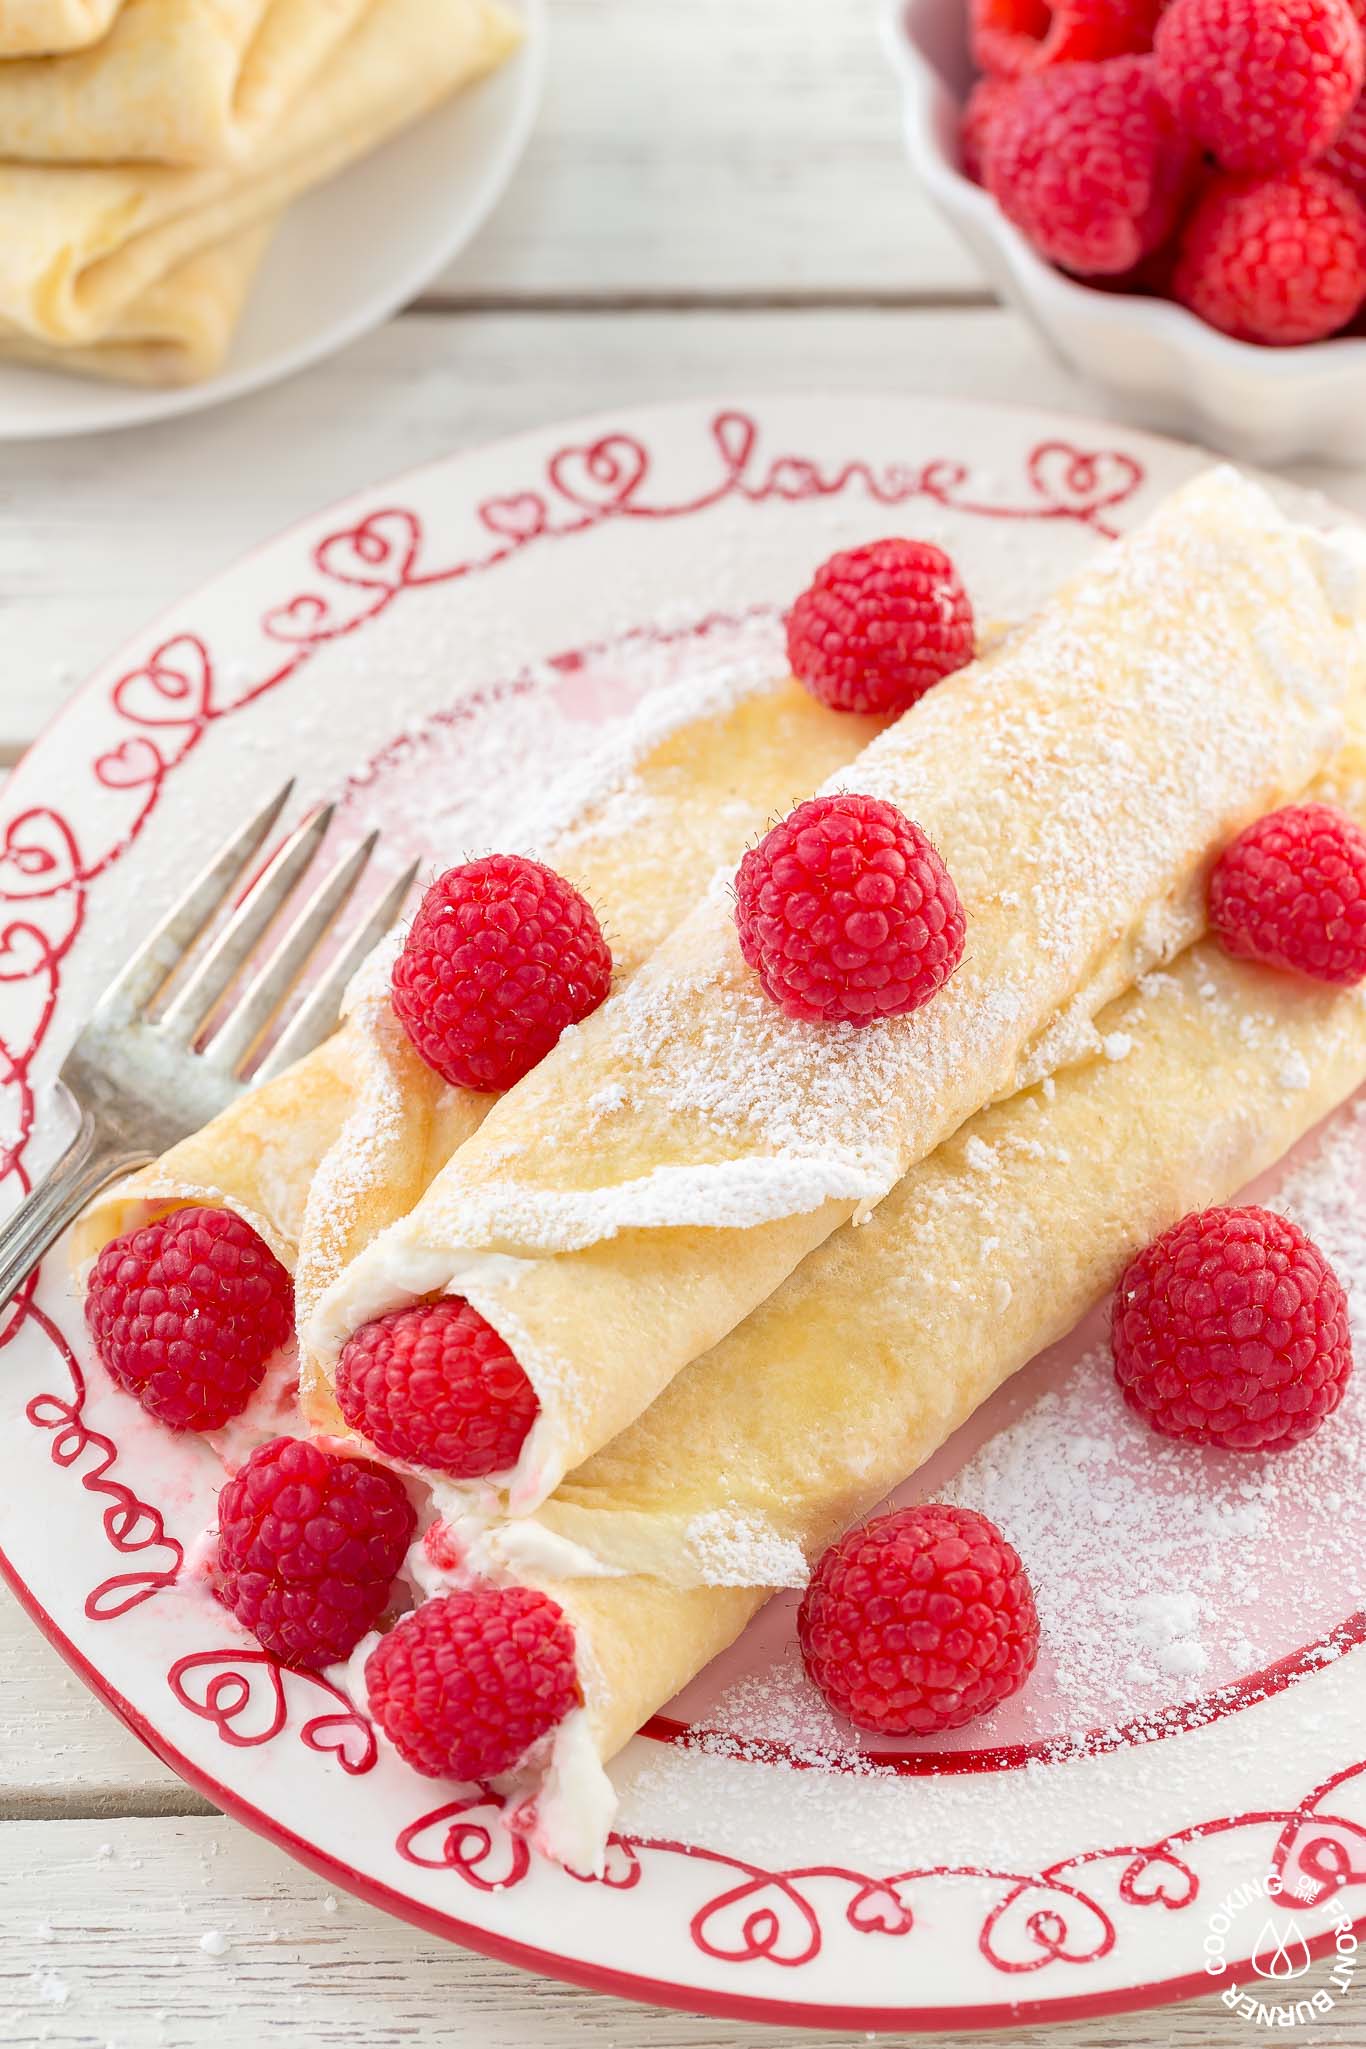 https://www.cookingonthefrontburners.com/wp-content/uploads/2018/01/Raspberry-Vanilla-Cream-Crepes-1.jpg